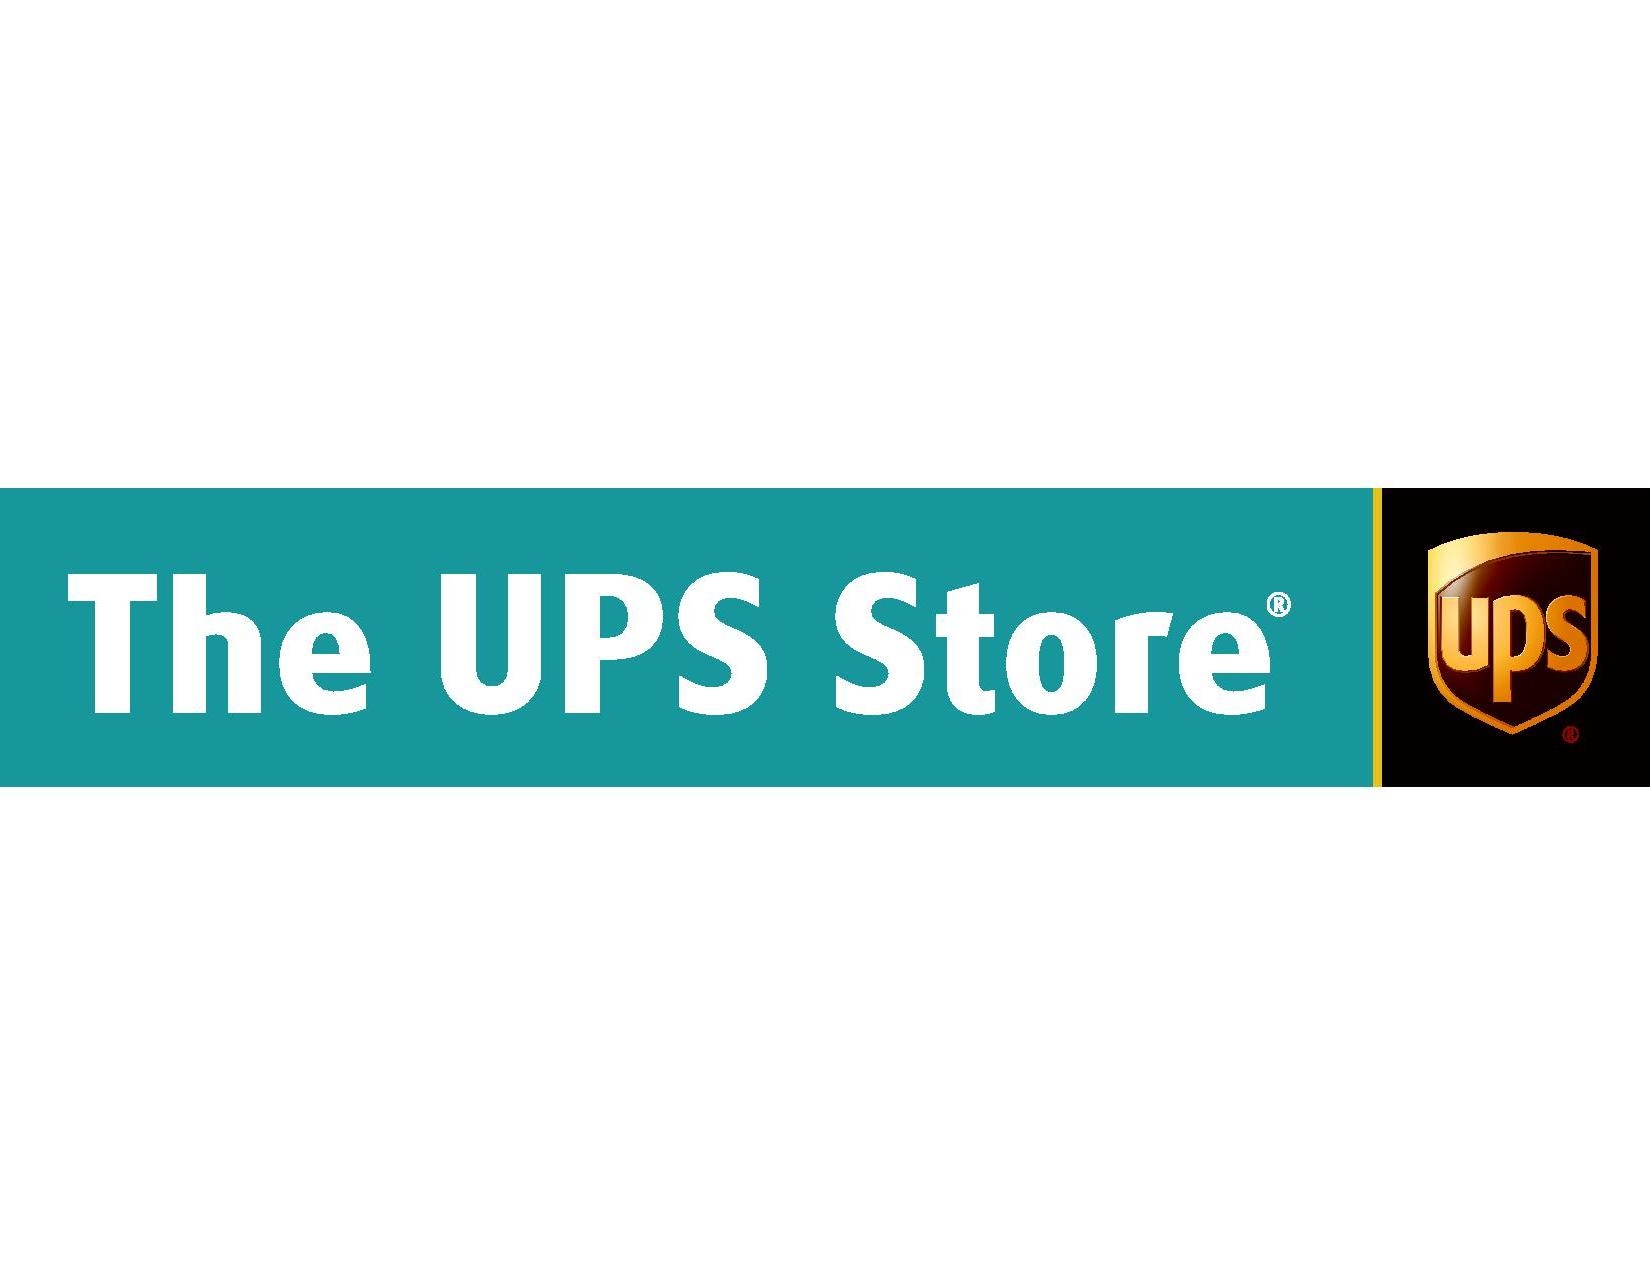 UPS Store Logo Vector